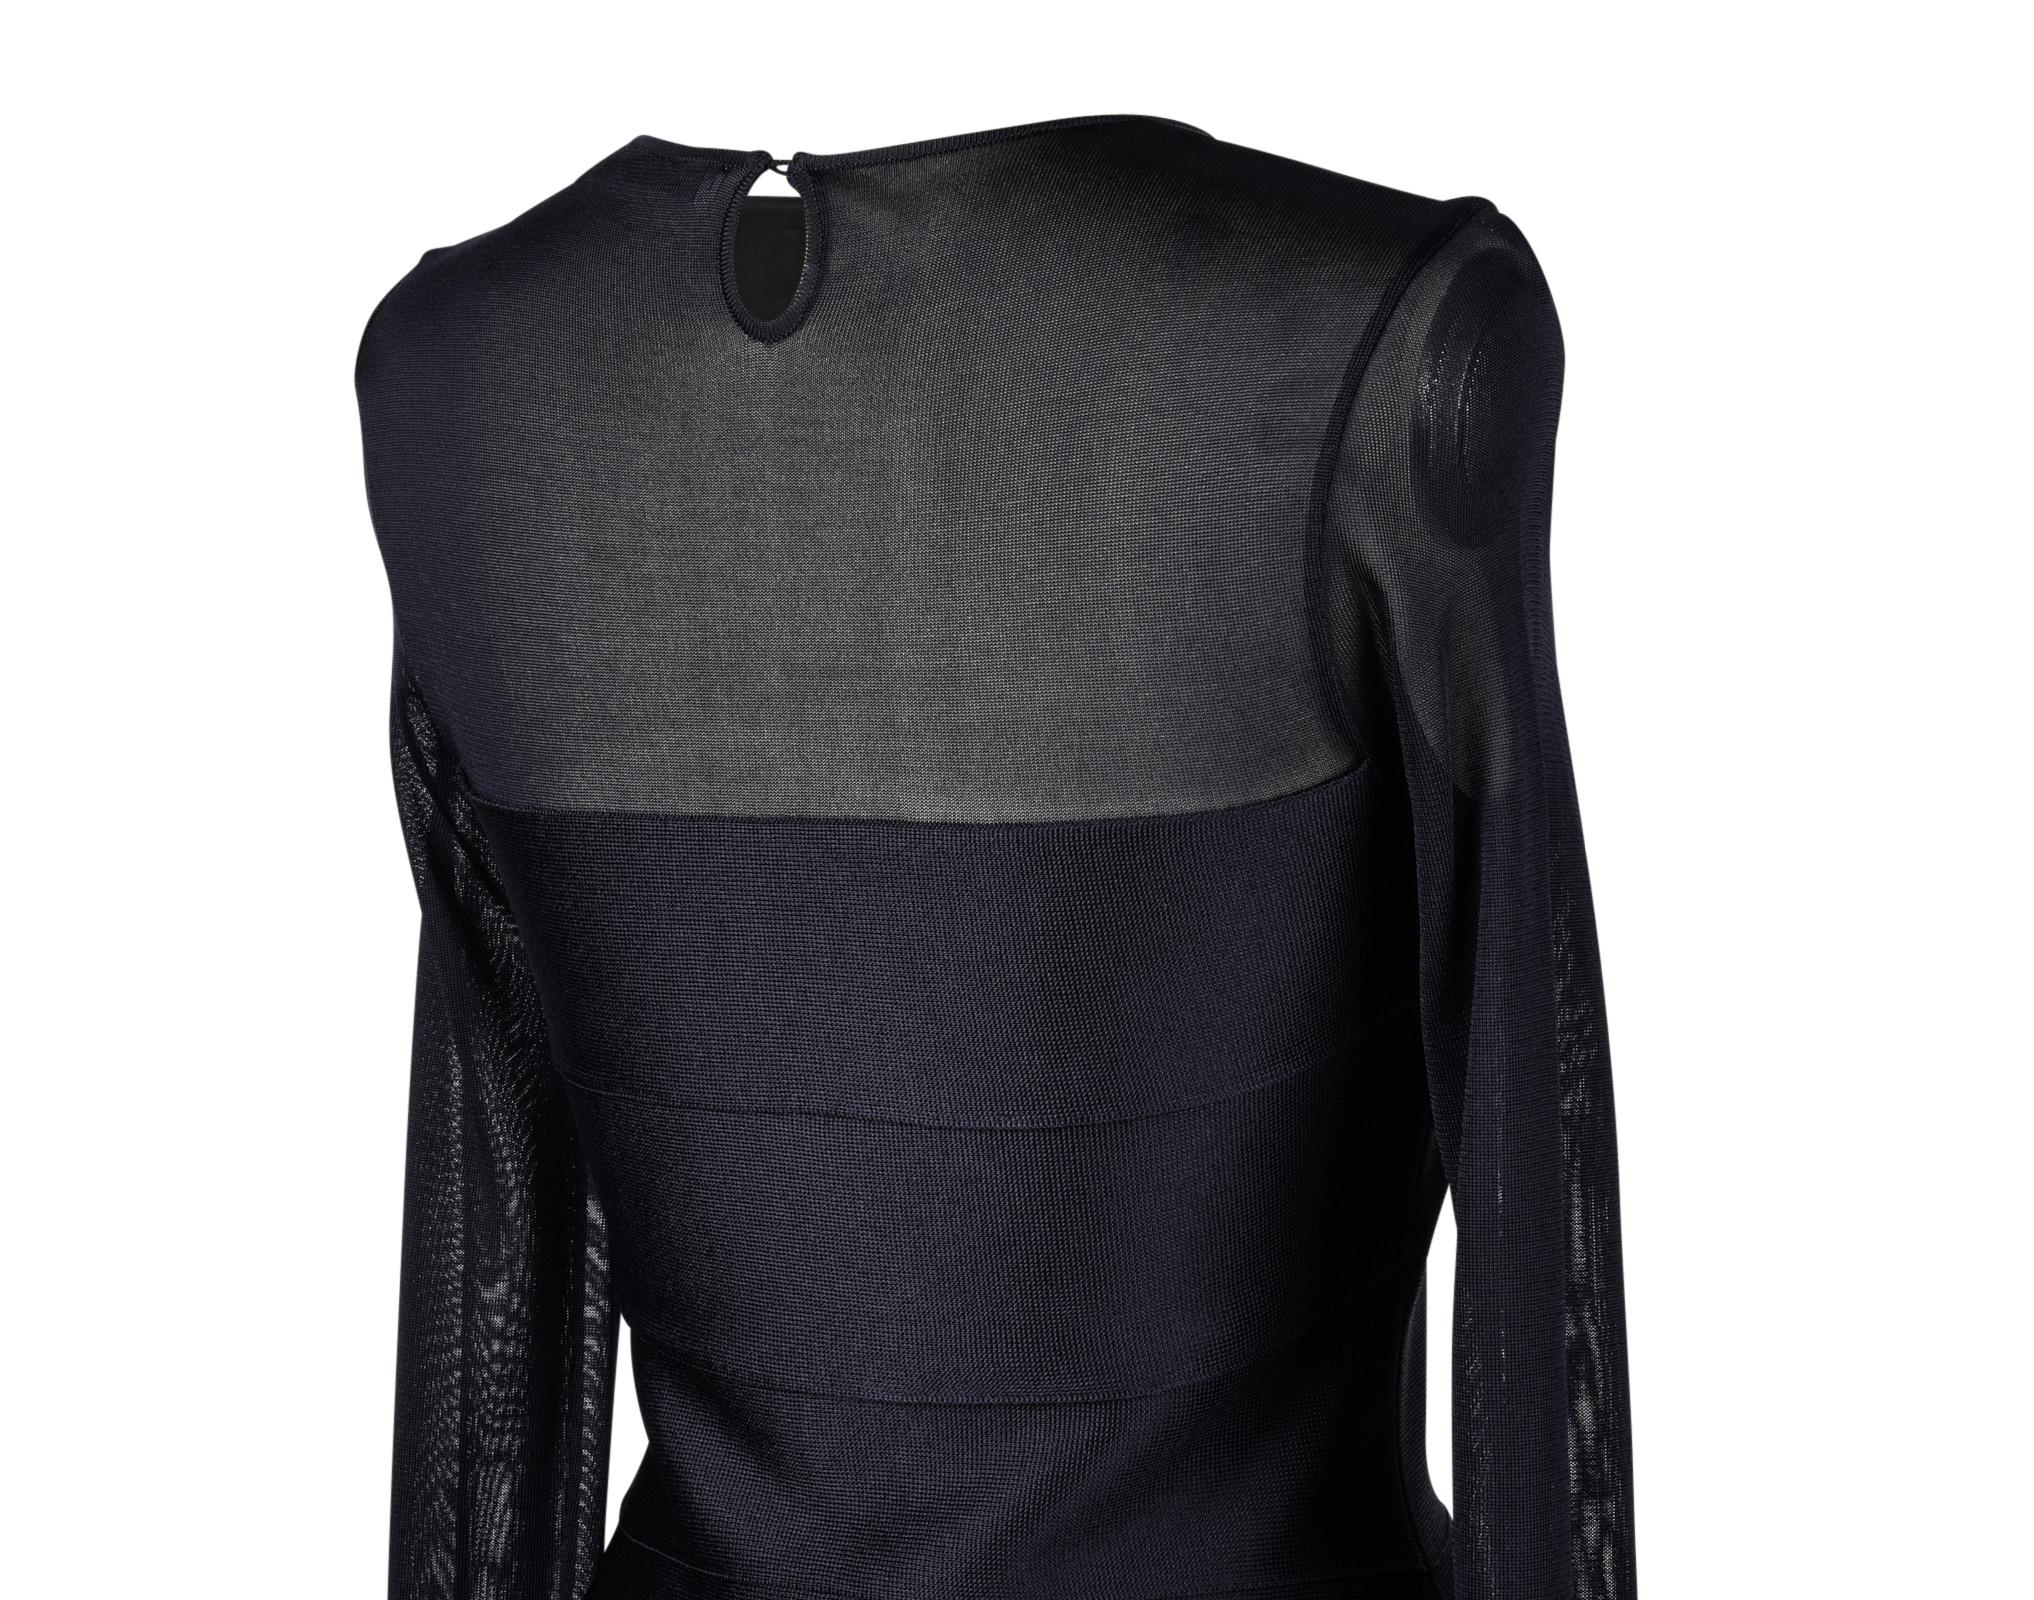 Christian Dior Dress Black Bandage and Mesh 40 / 8 4